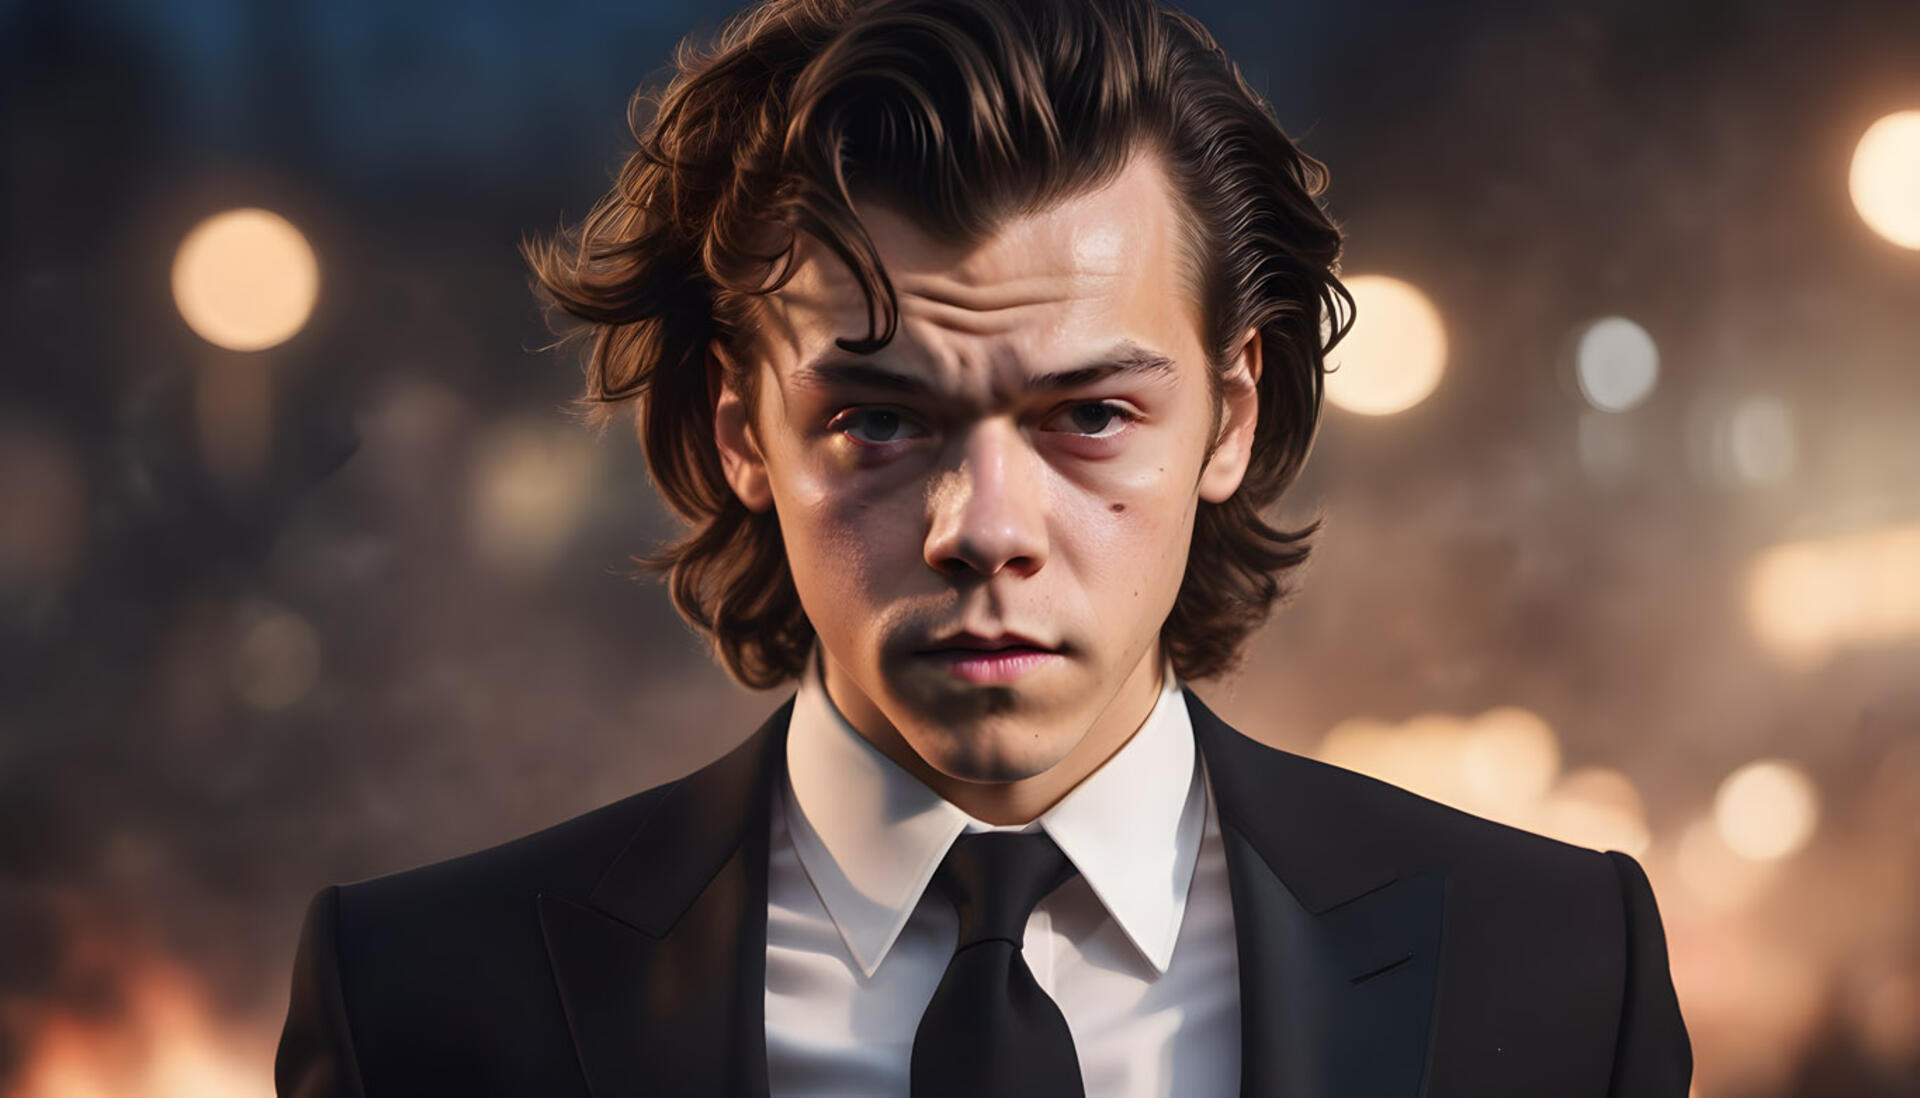 18 year old Harry Styles portrait